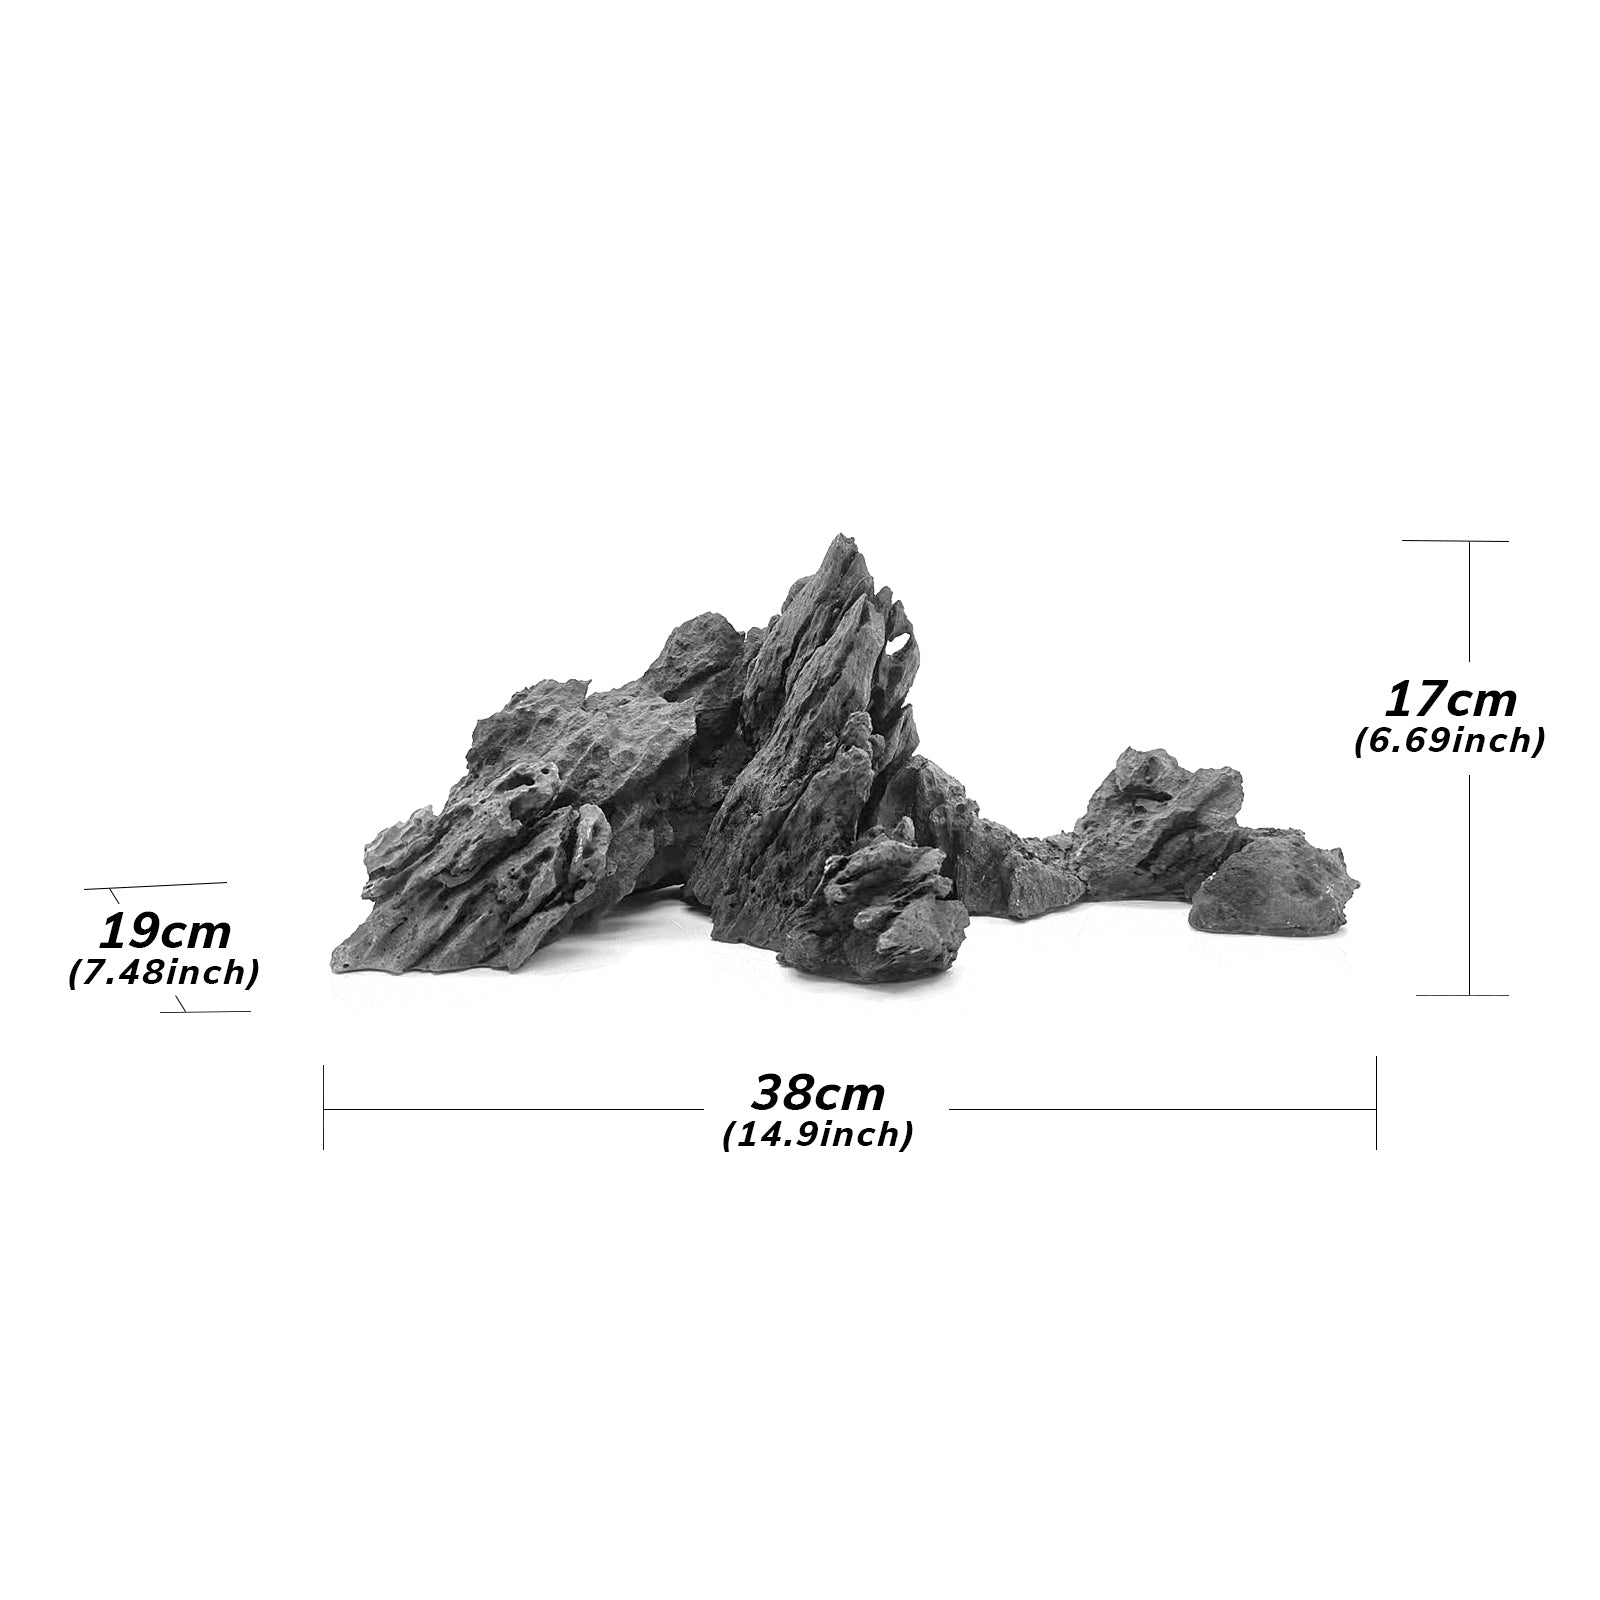 AQUARIUM ROCKS: description and features of Dragon Stone, Seiryu